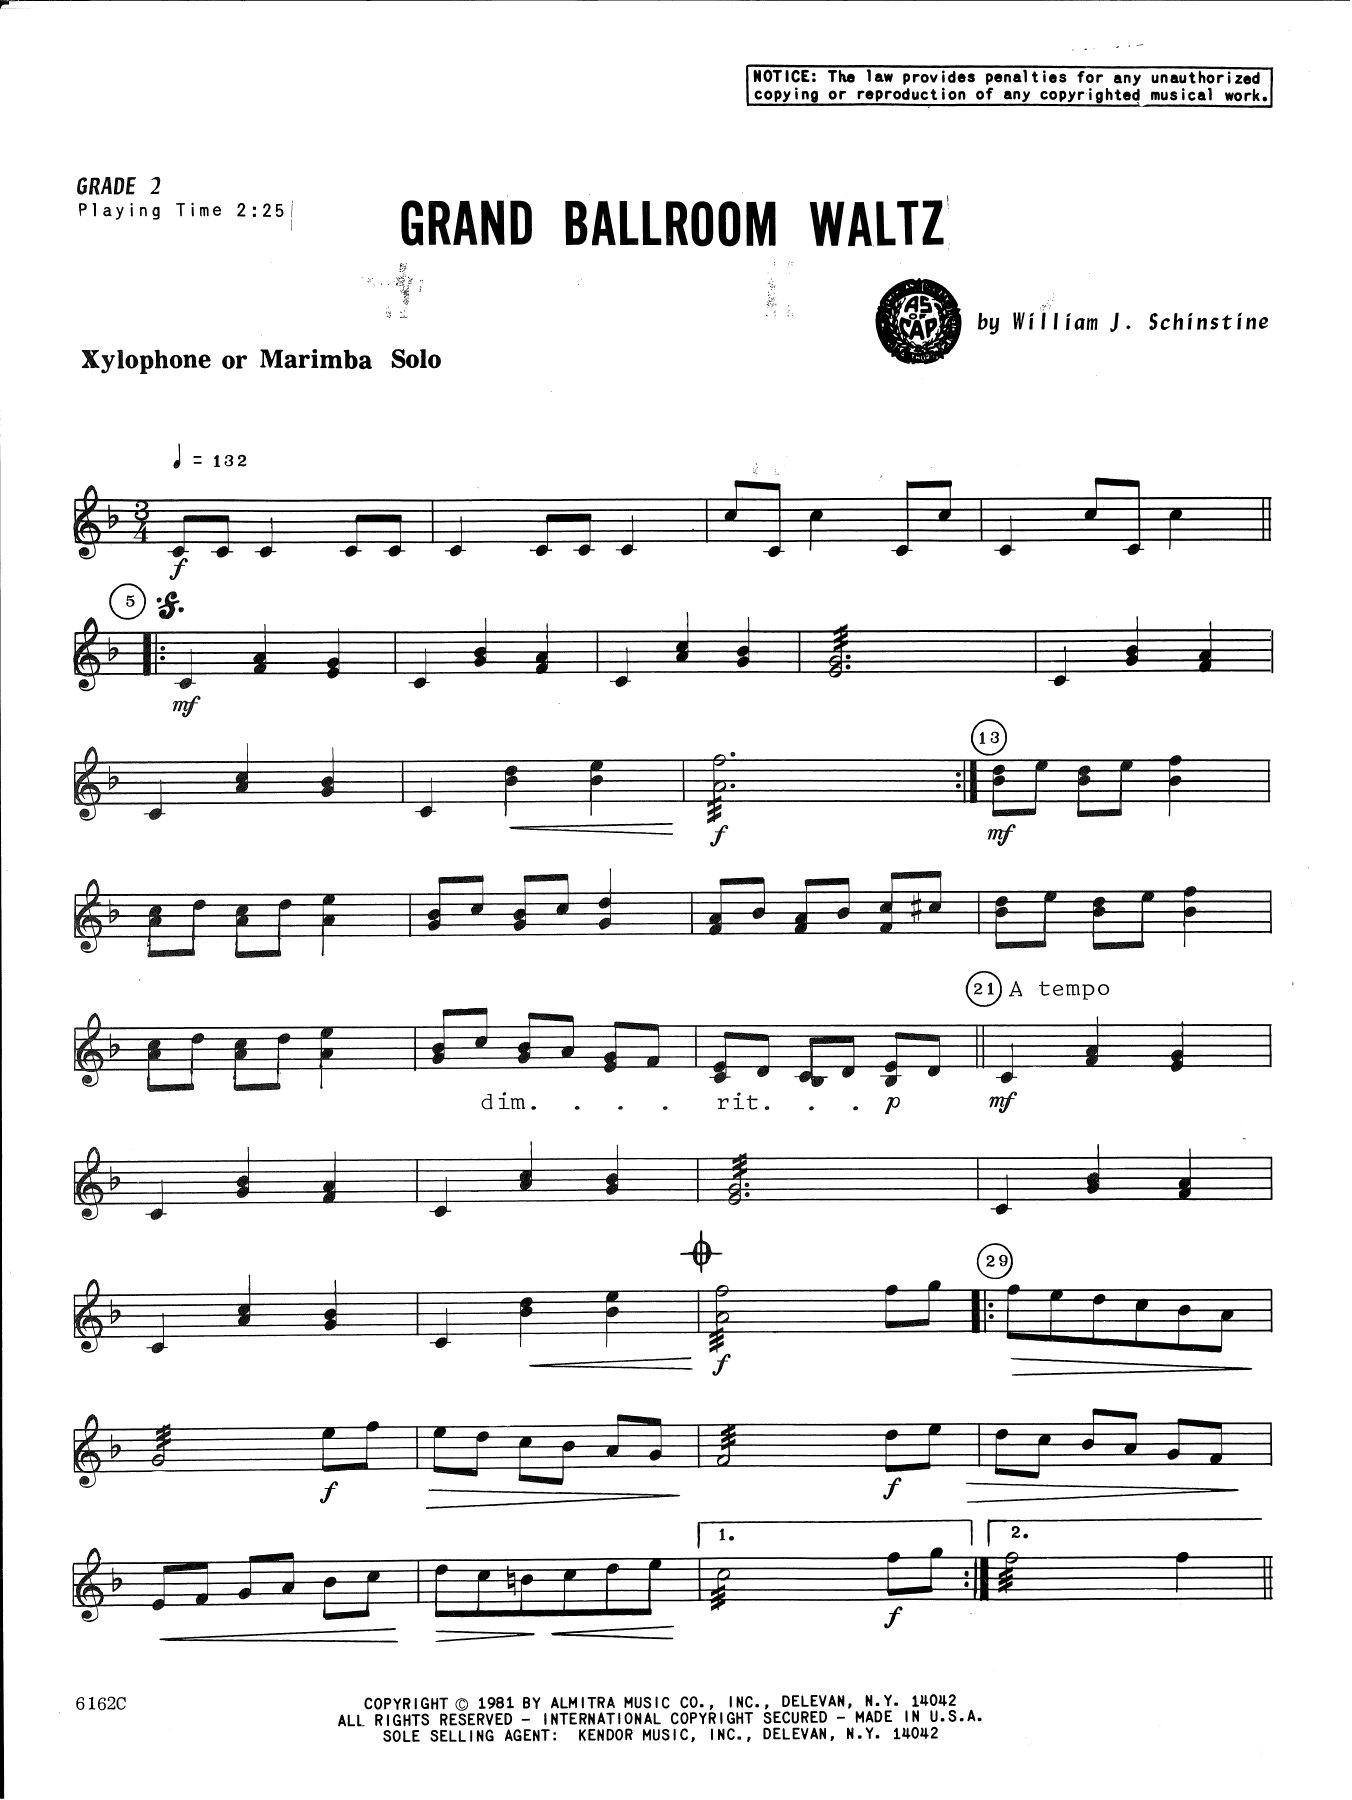 Download Willian Schinstine Grand Ballroom Waltz Sheet Music